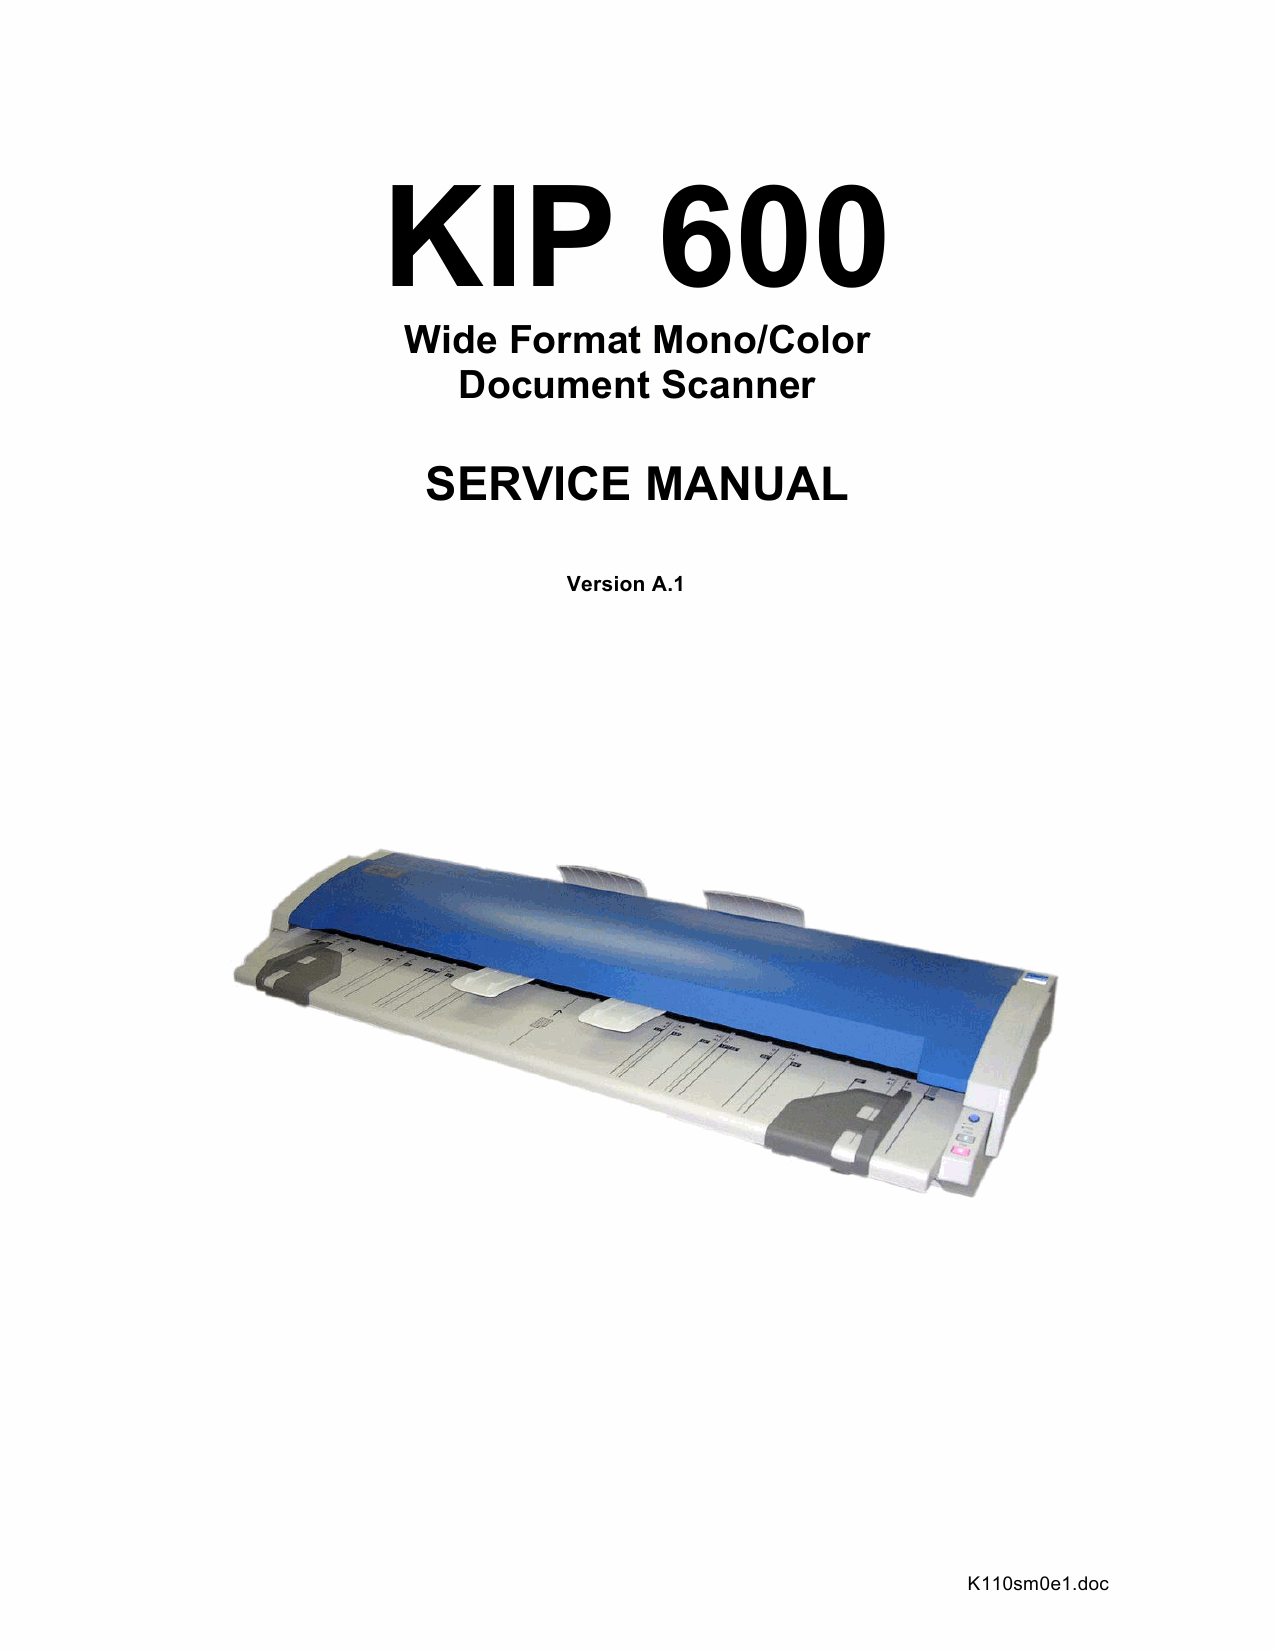 KIP 600 Service Manual-1